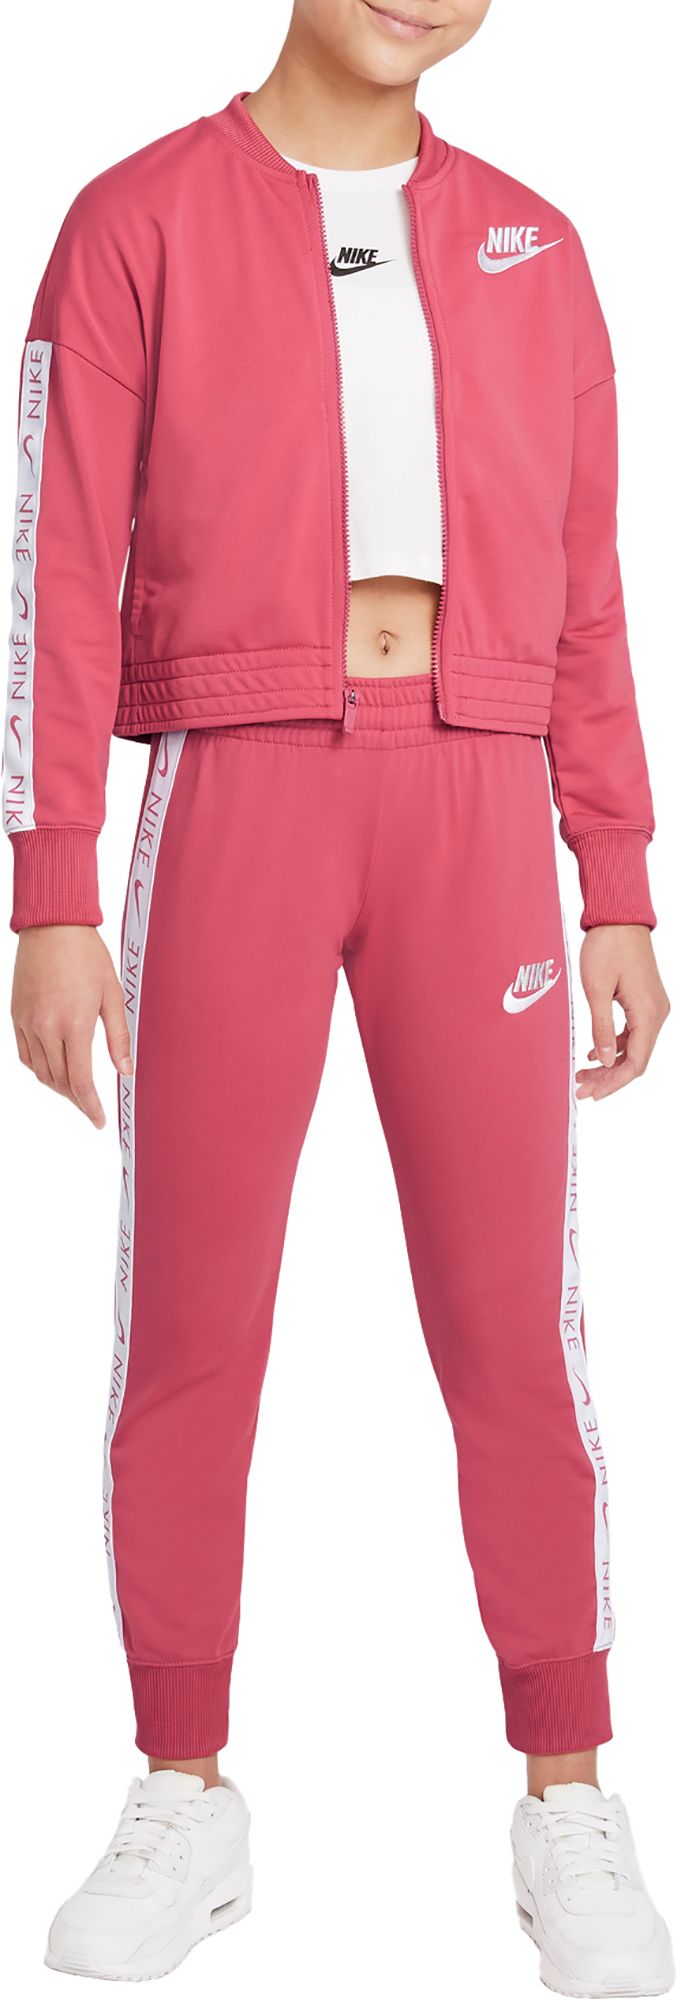 Nike / Girls' Full-Zip Jacket and Pants Tracksuit